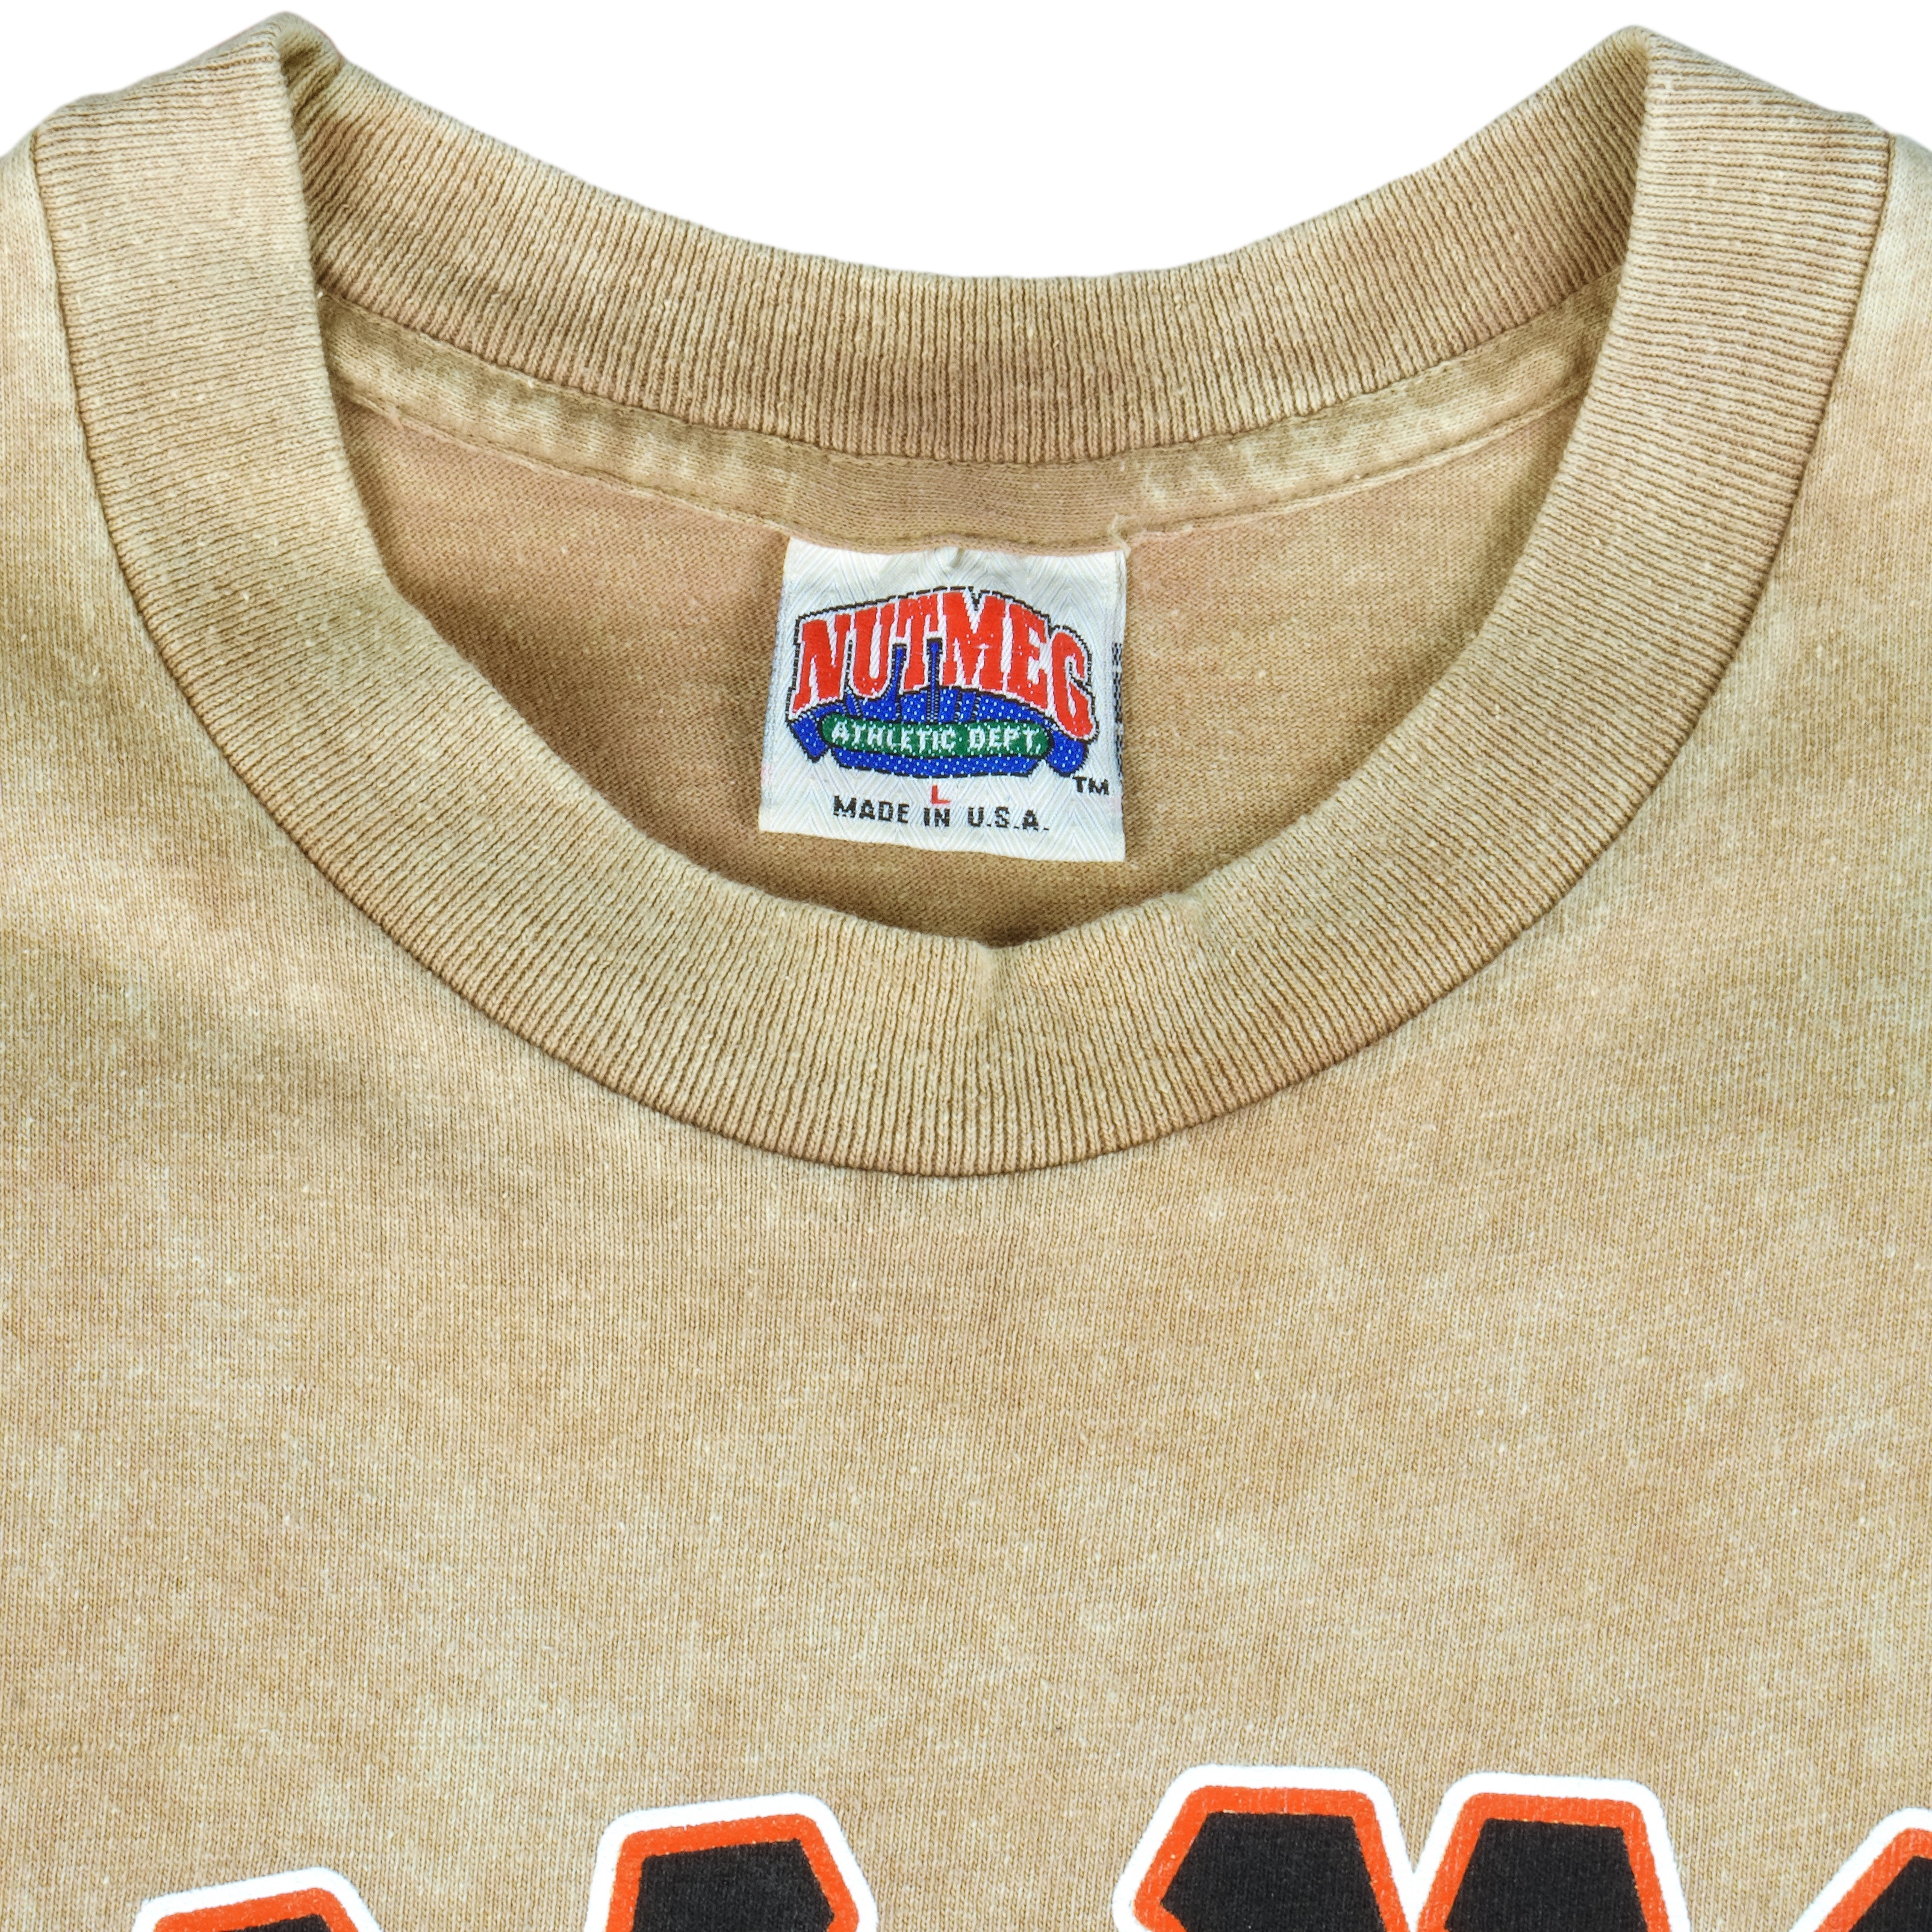 Vintage NFL NY Giants Tee Shirt 1991 Size Medium Made in USA